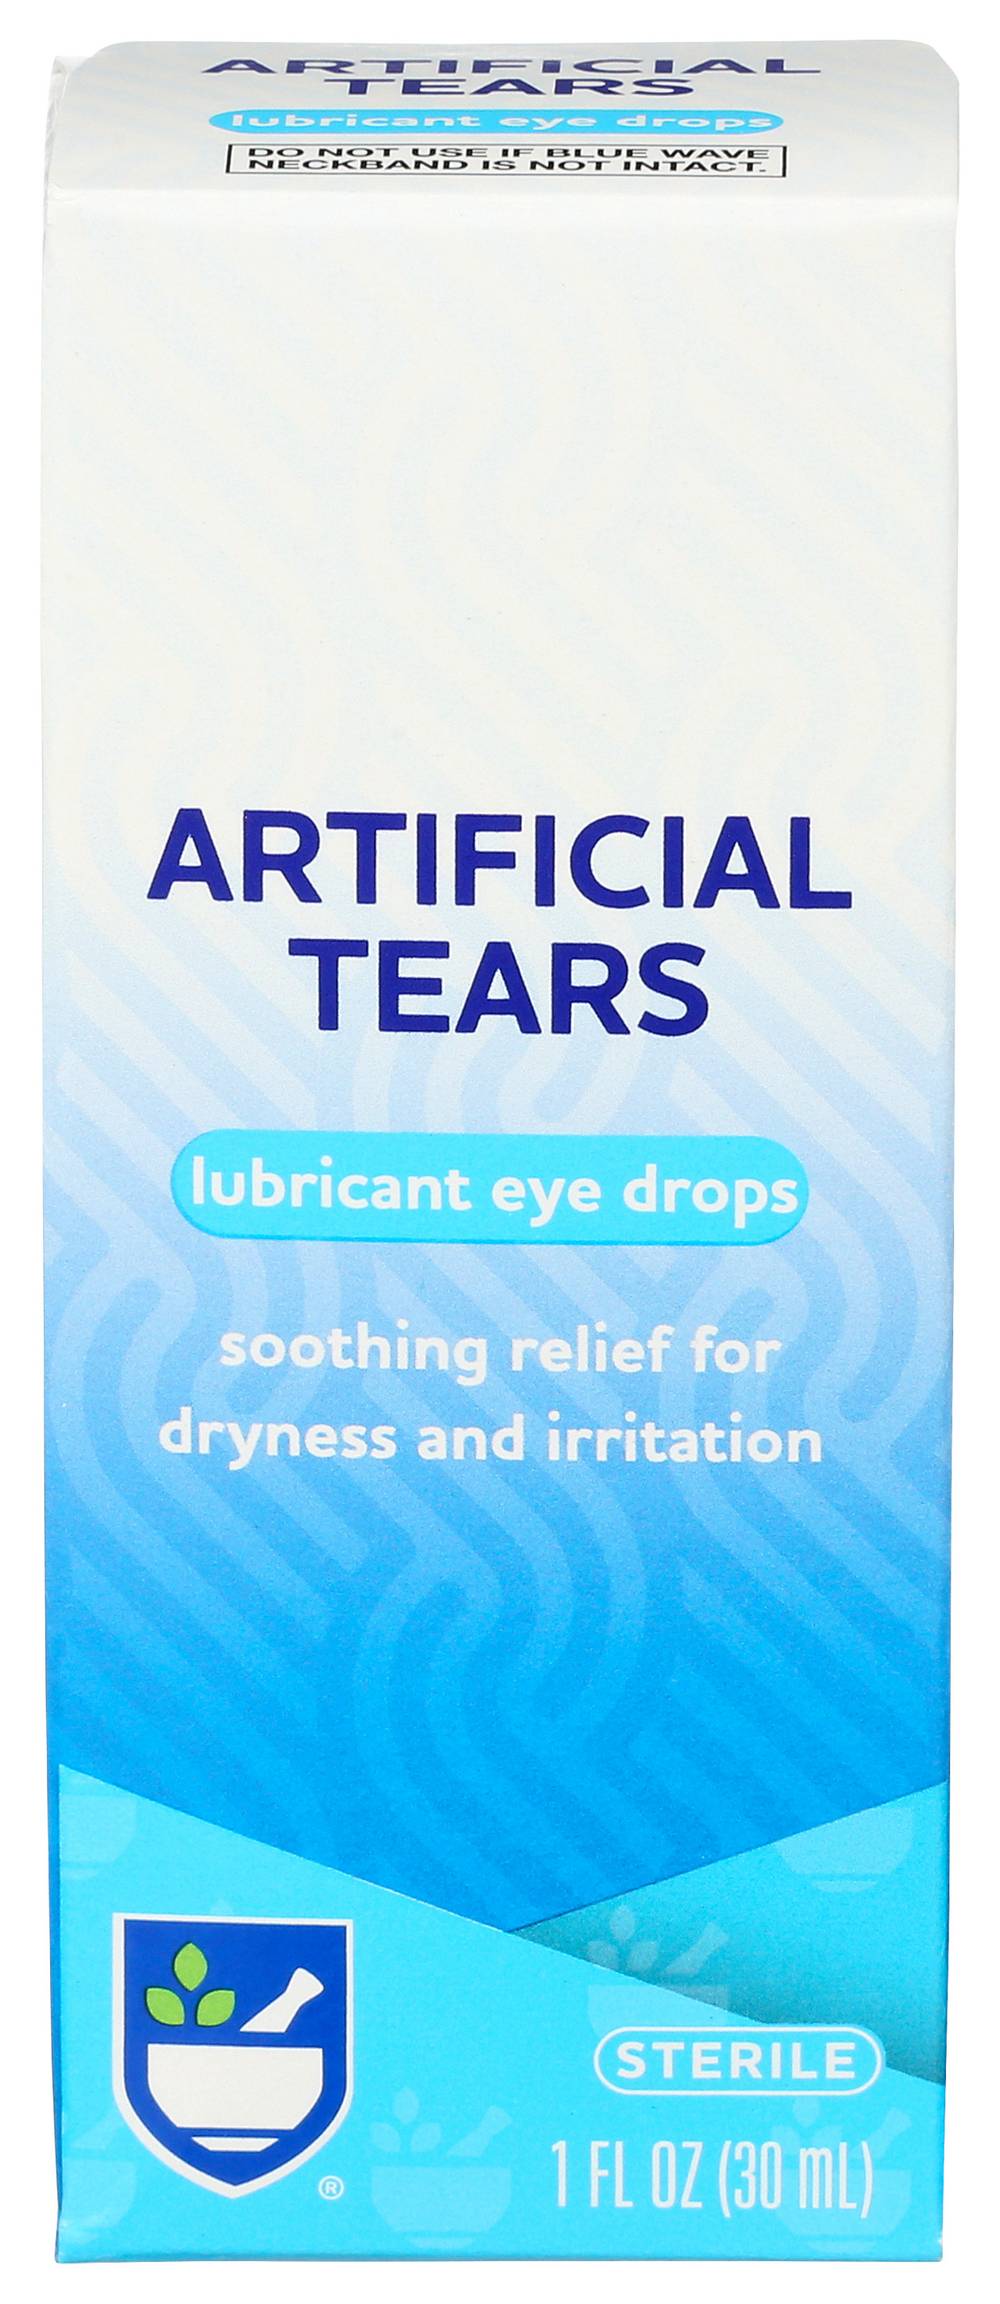 Rite Aid Artificial Tears Lubricant Eye Drops